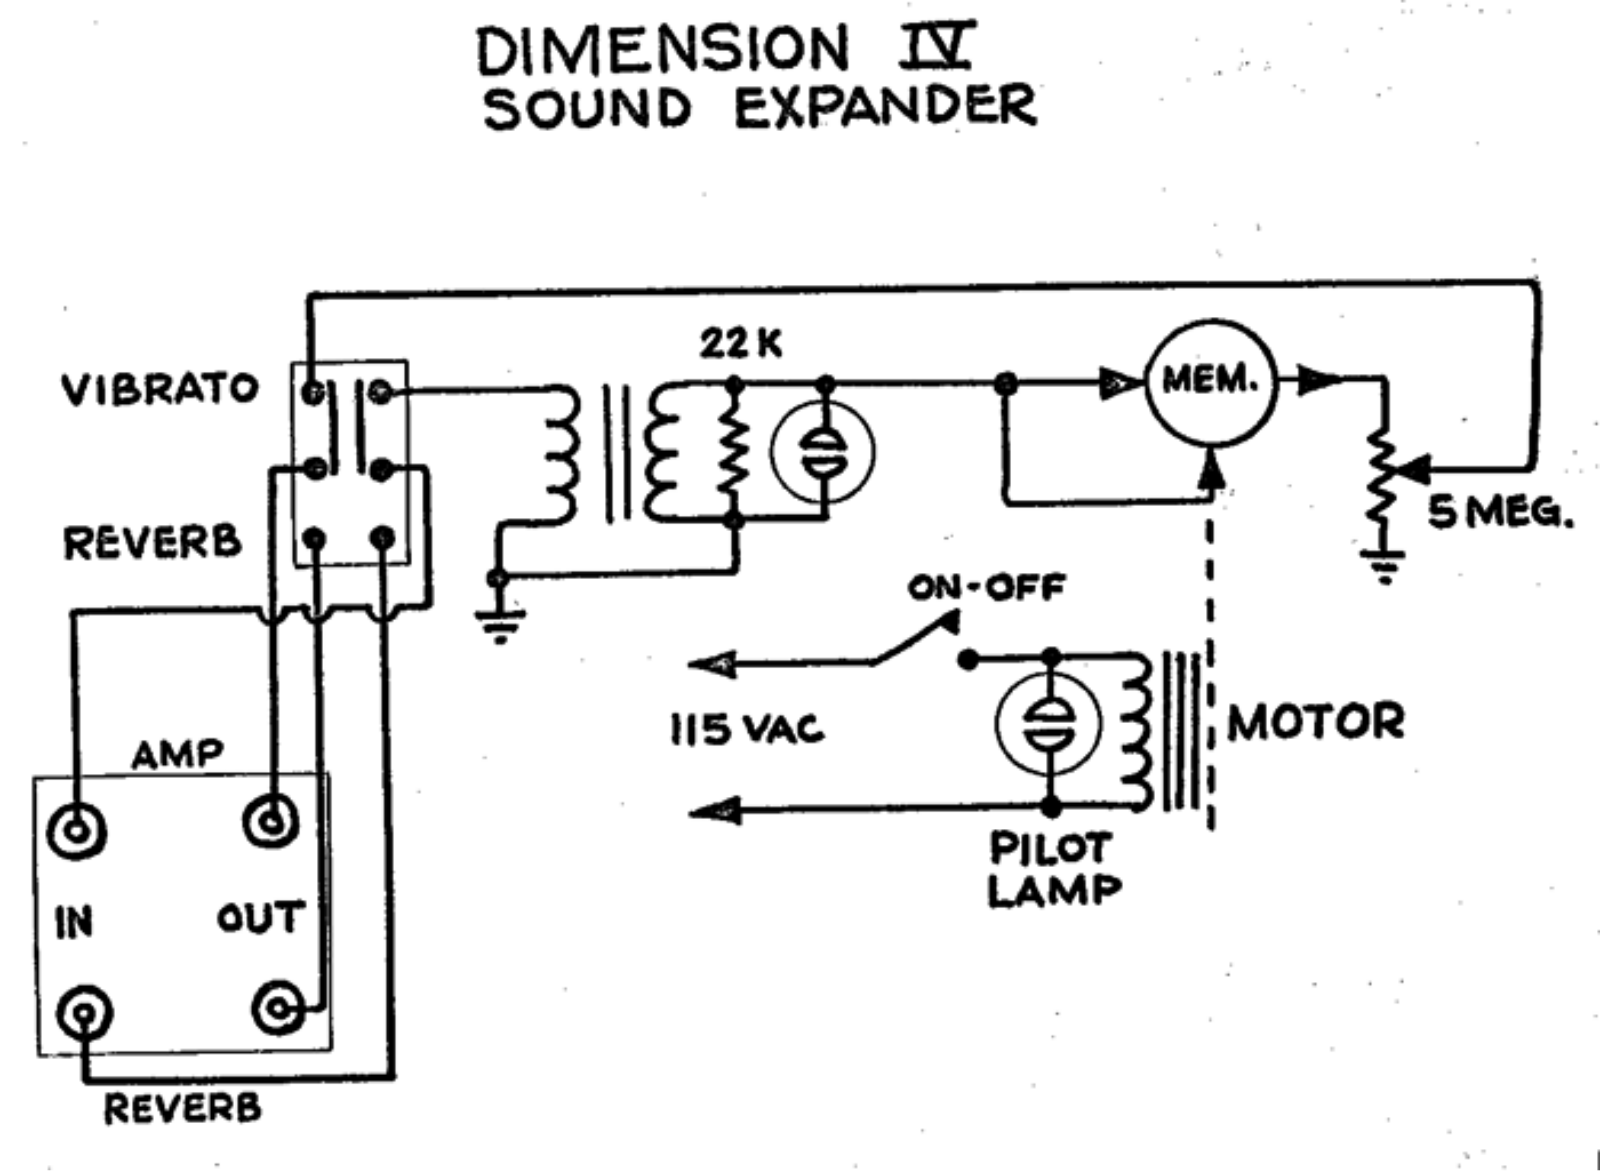 Fender dimension iv soundexpander oilcan schematic